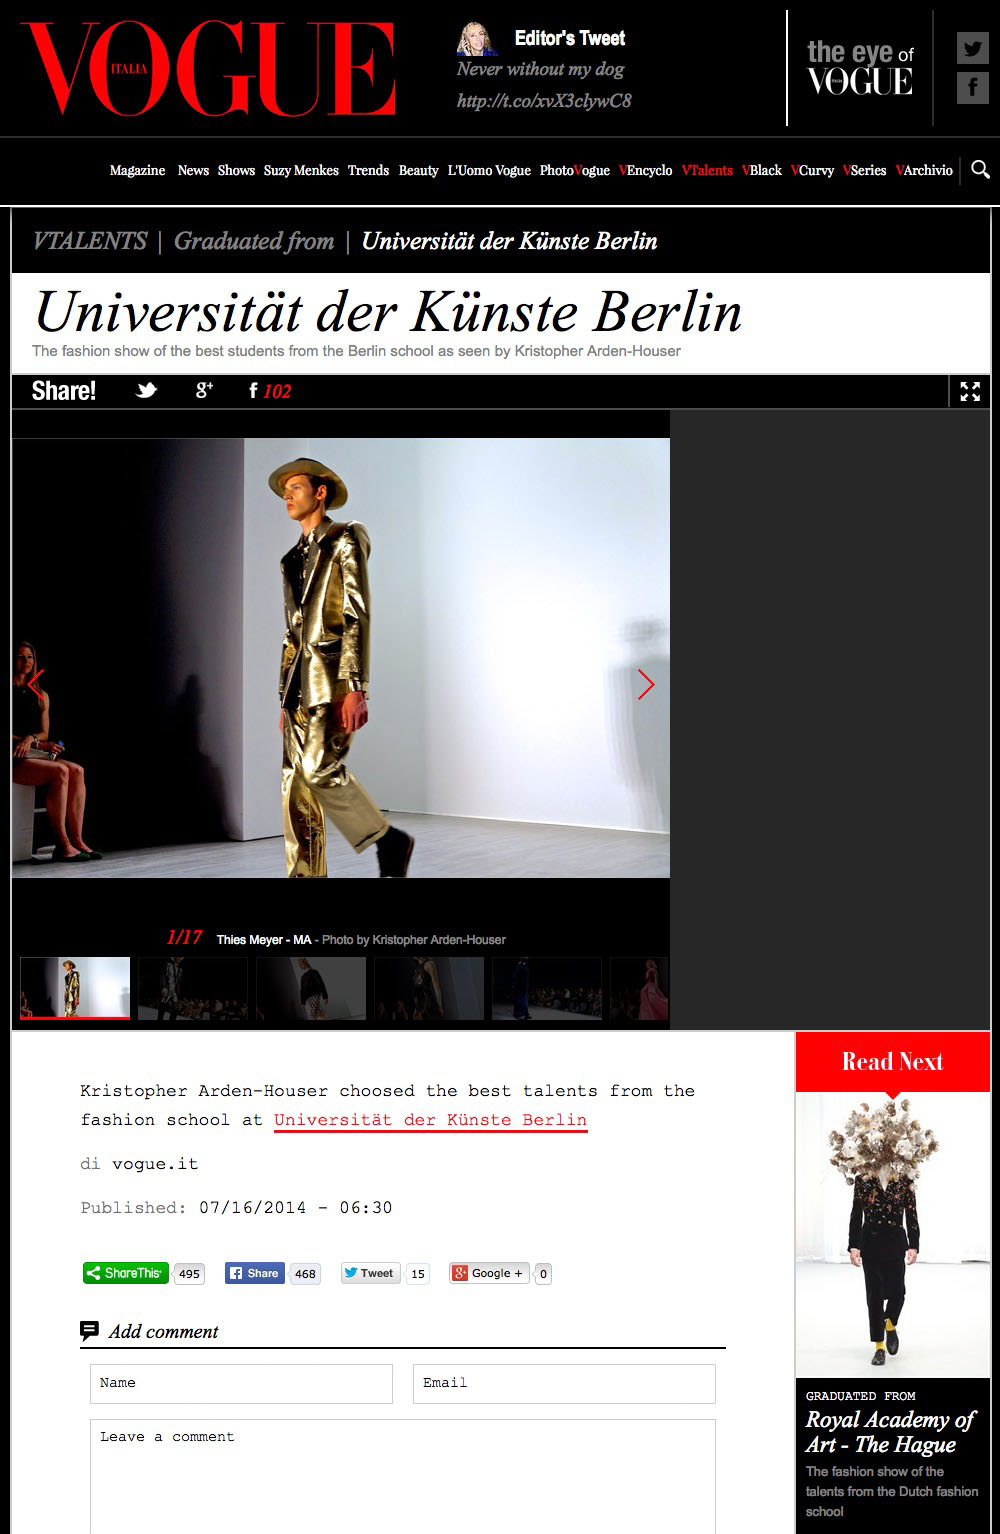 Vogue.it_talents-graduated-from-2014-07-universitat-der-kunste-berlin (20150512)